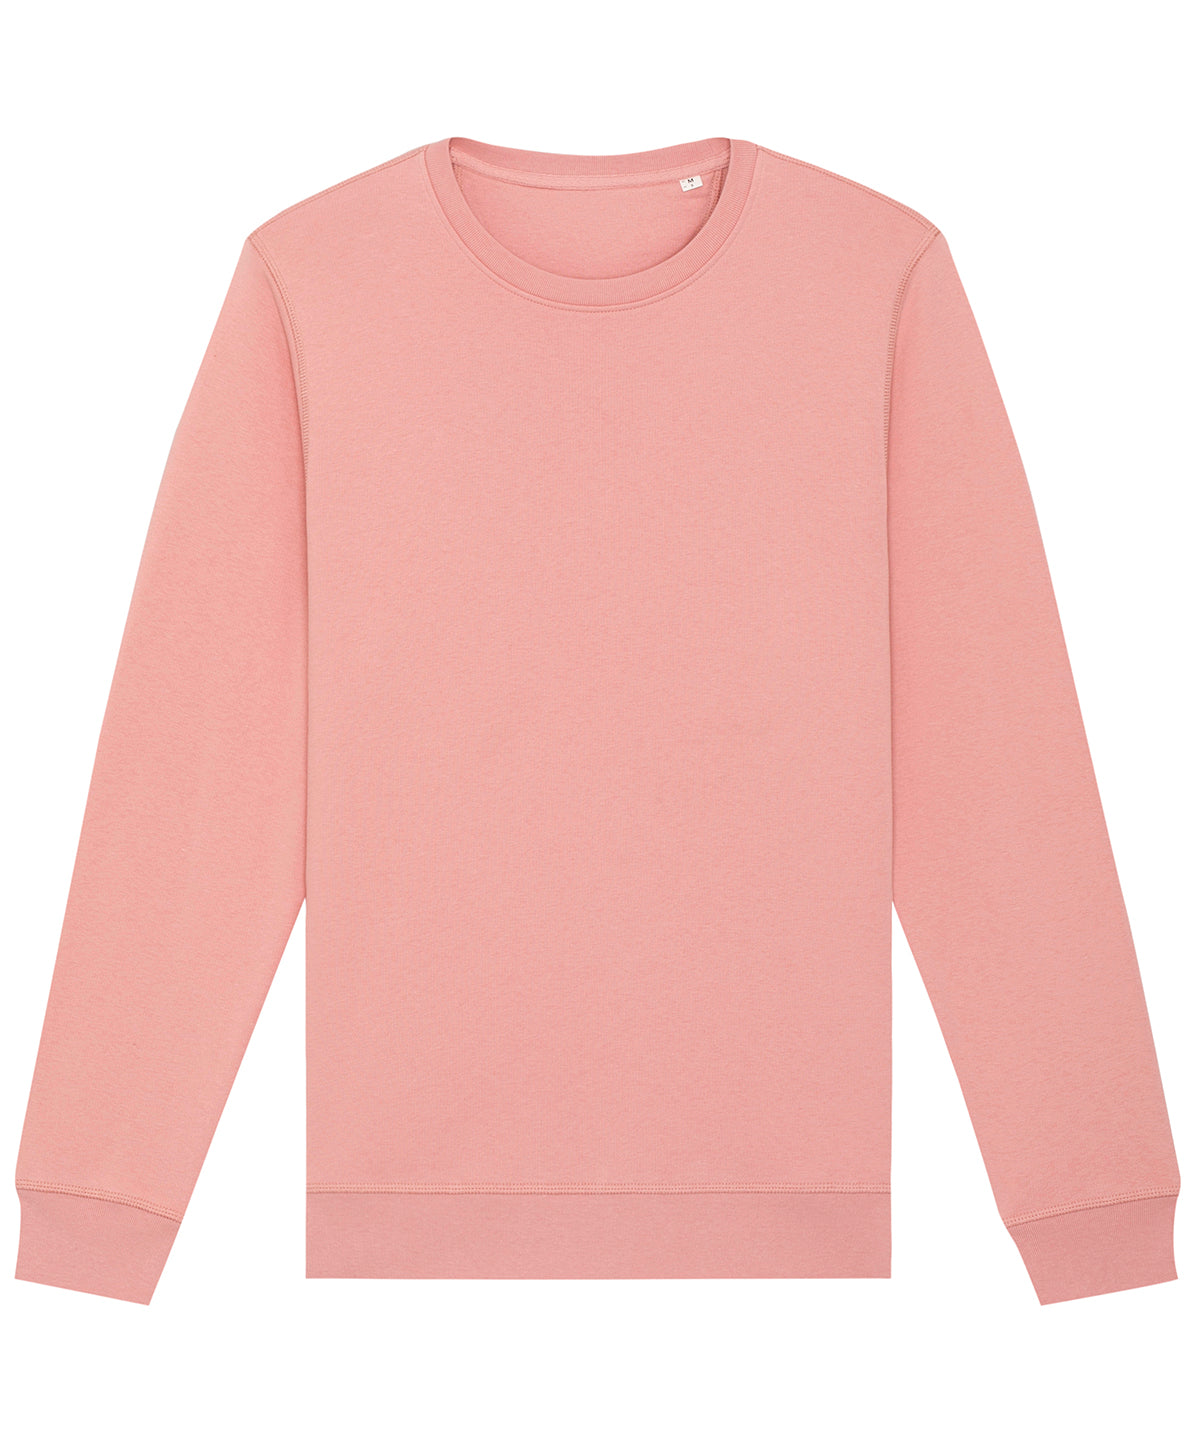 Essential Organic Sweatshirt (Mens/Unisex)